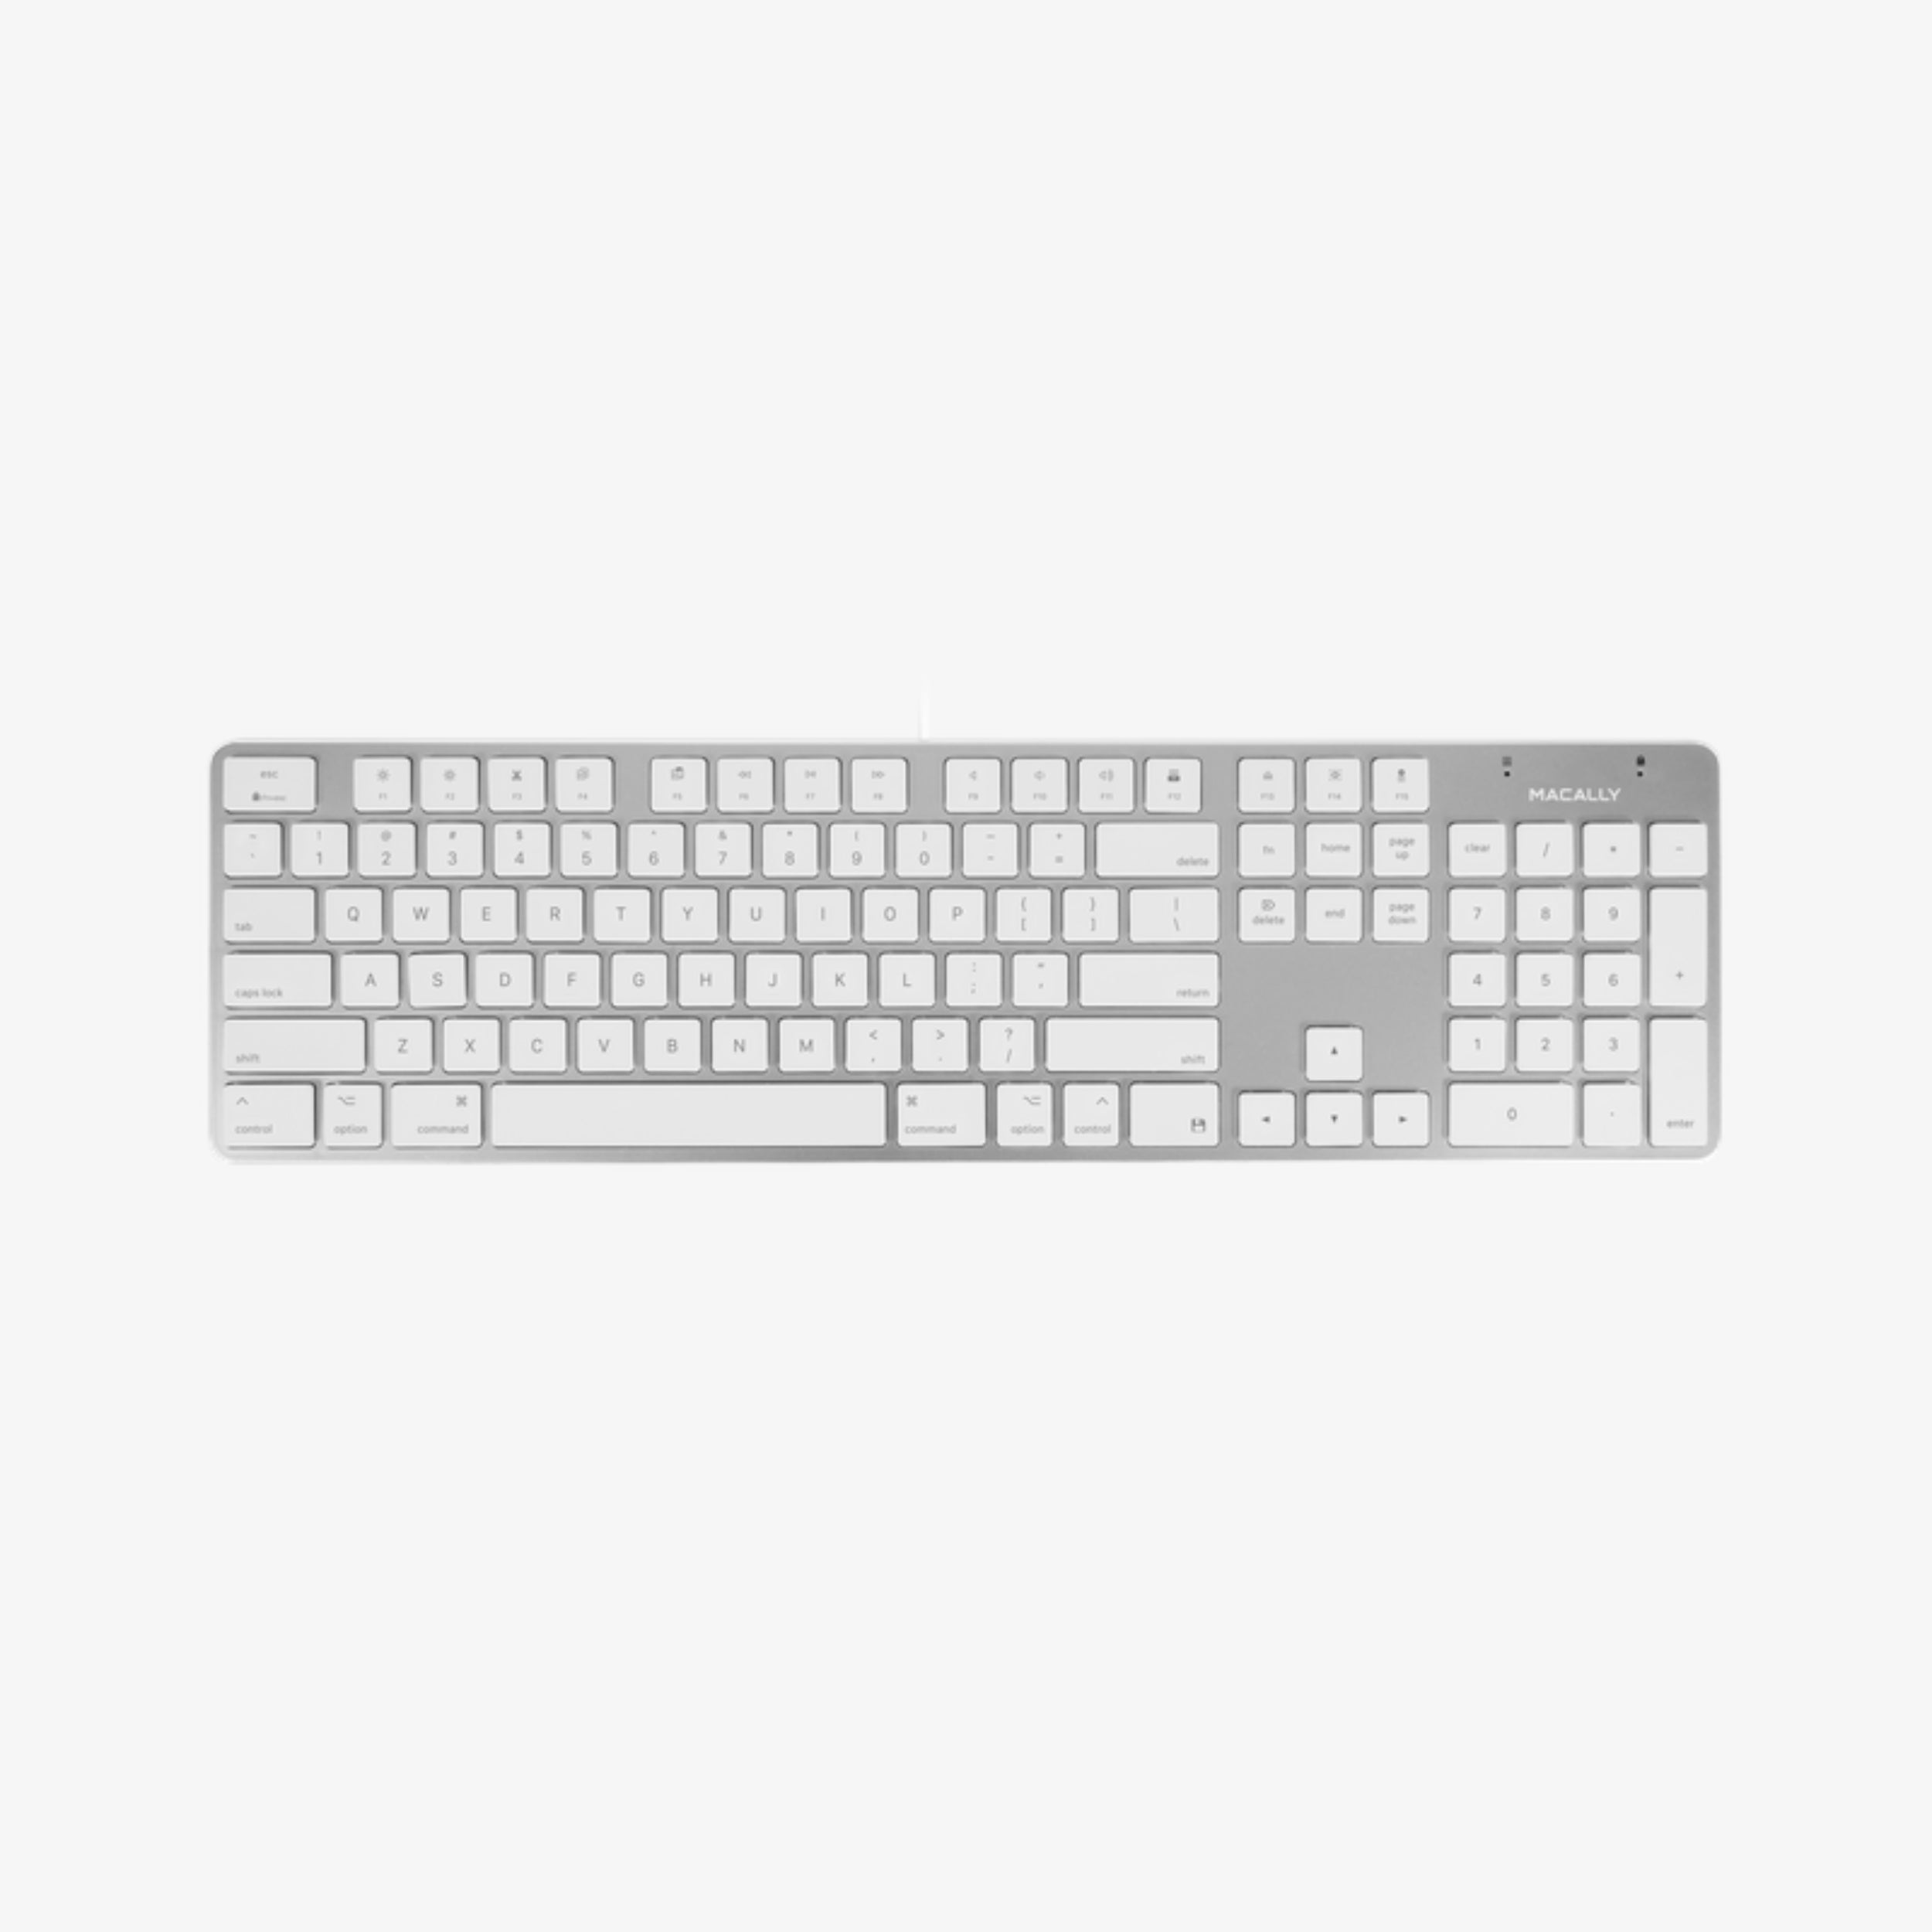 USB Keyboard | Wired, Full Size & Sleek